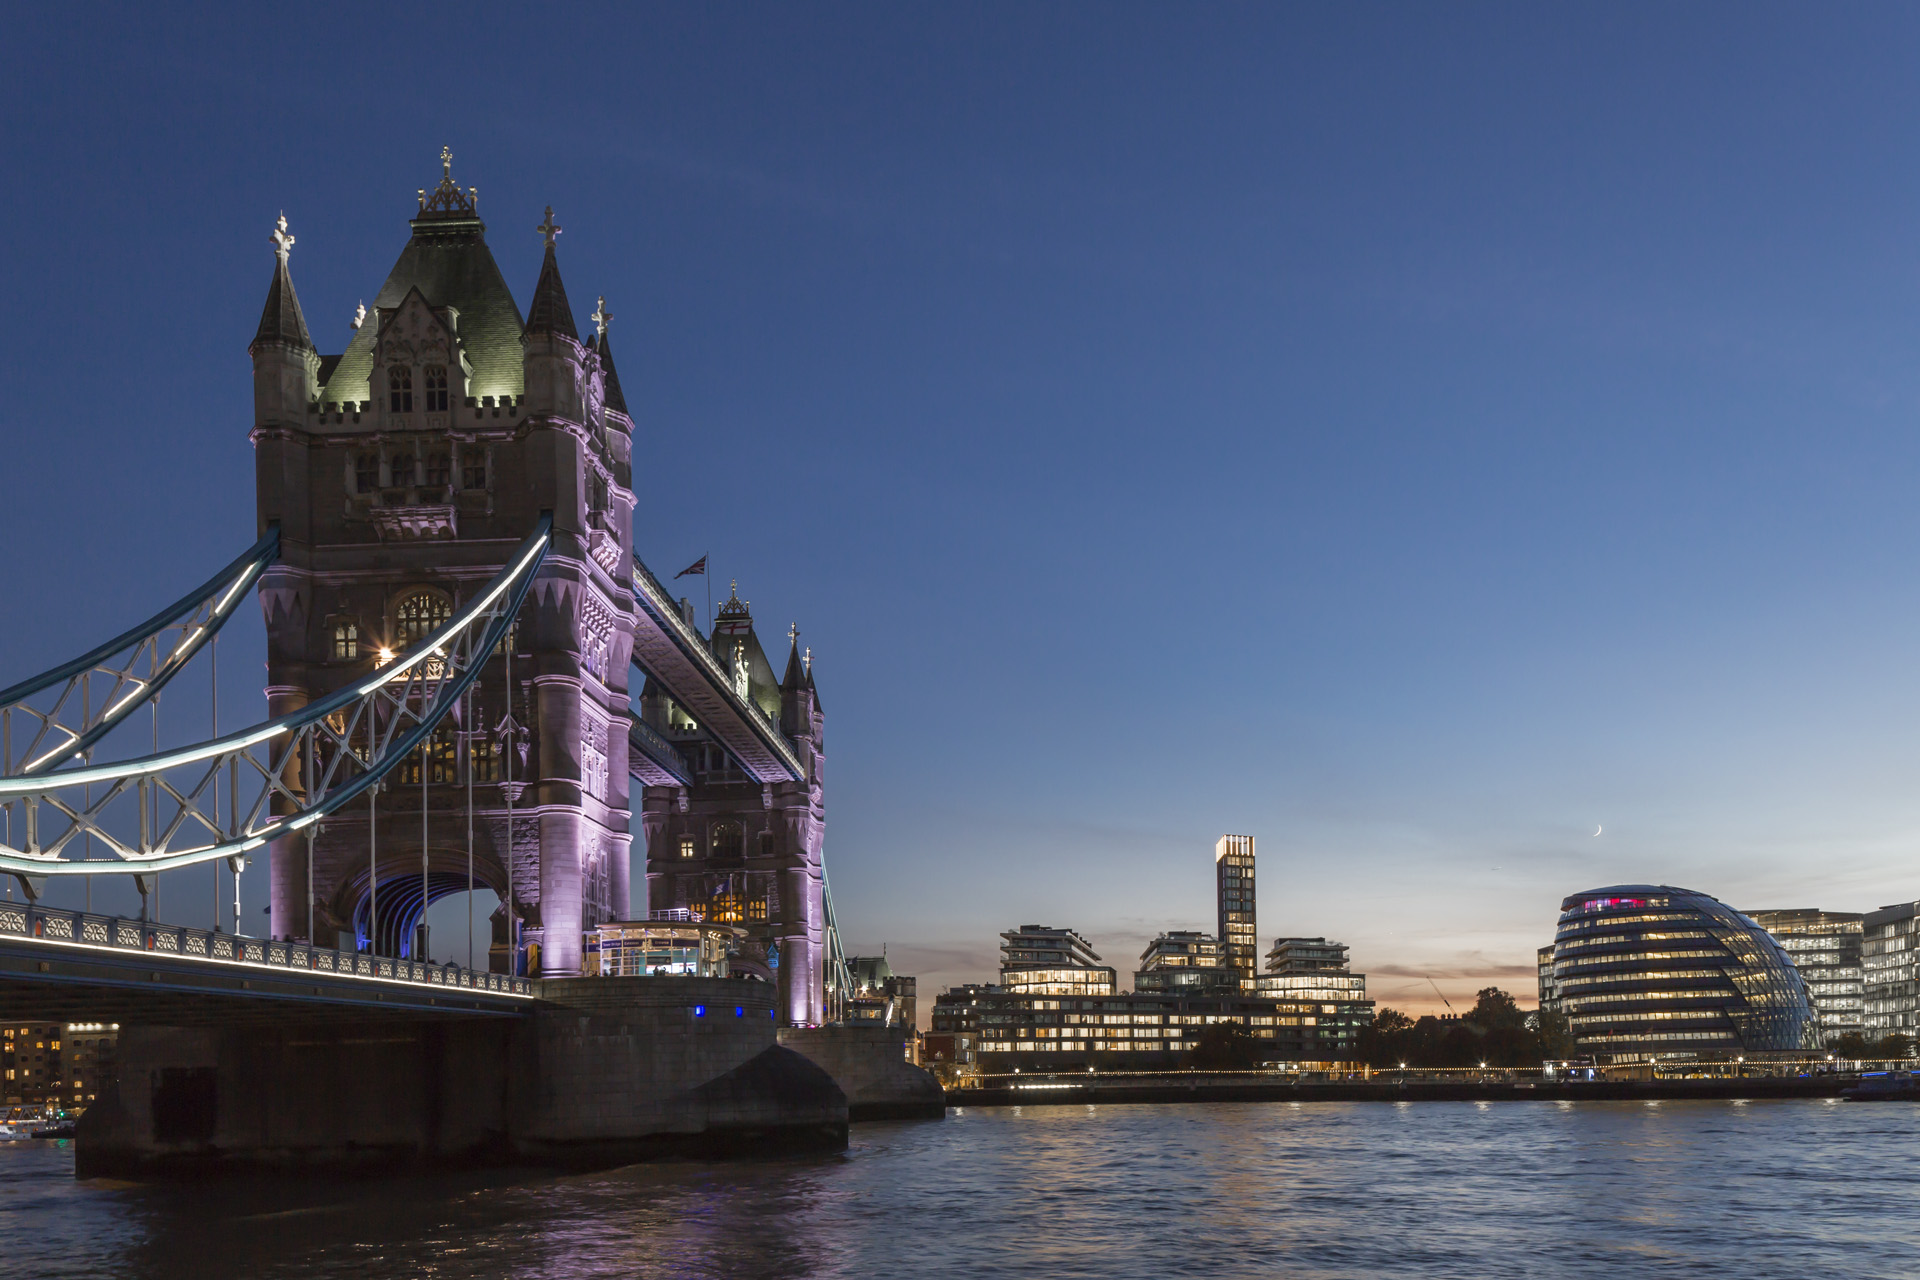 Tower Bridge Ticket Office & Exhibition | bere:architects